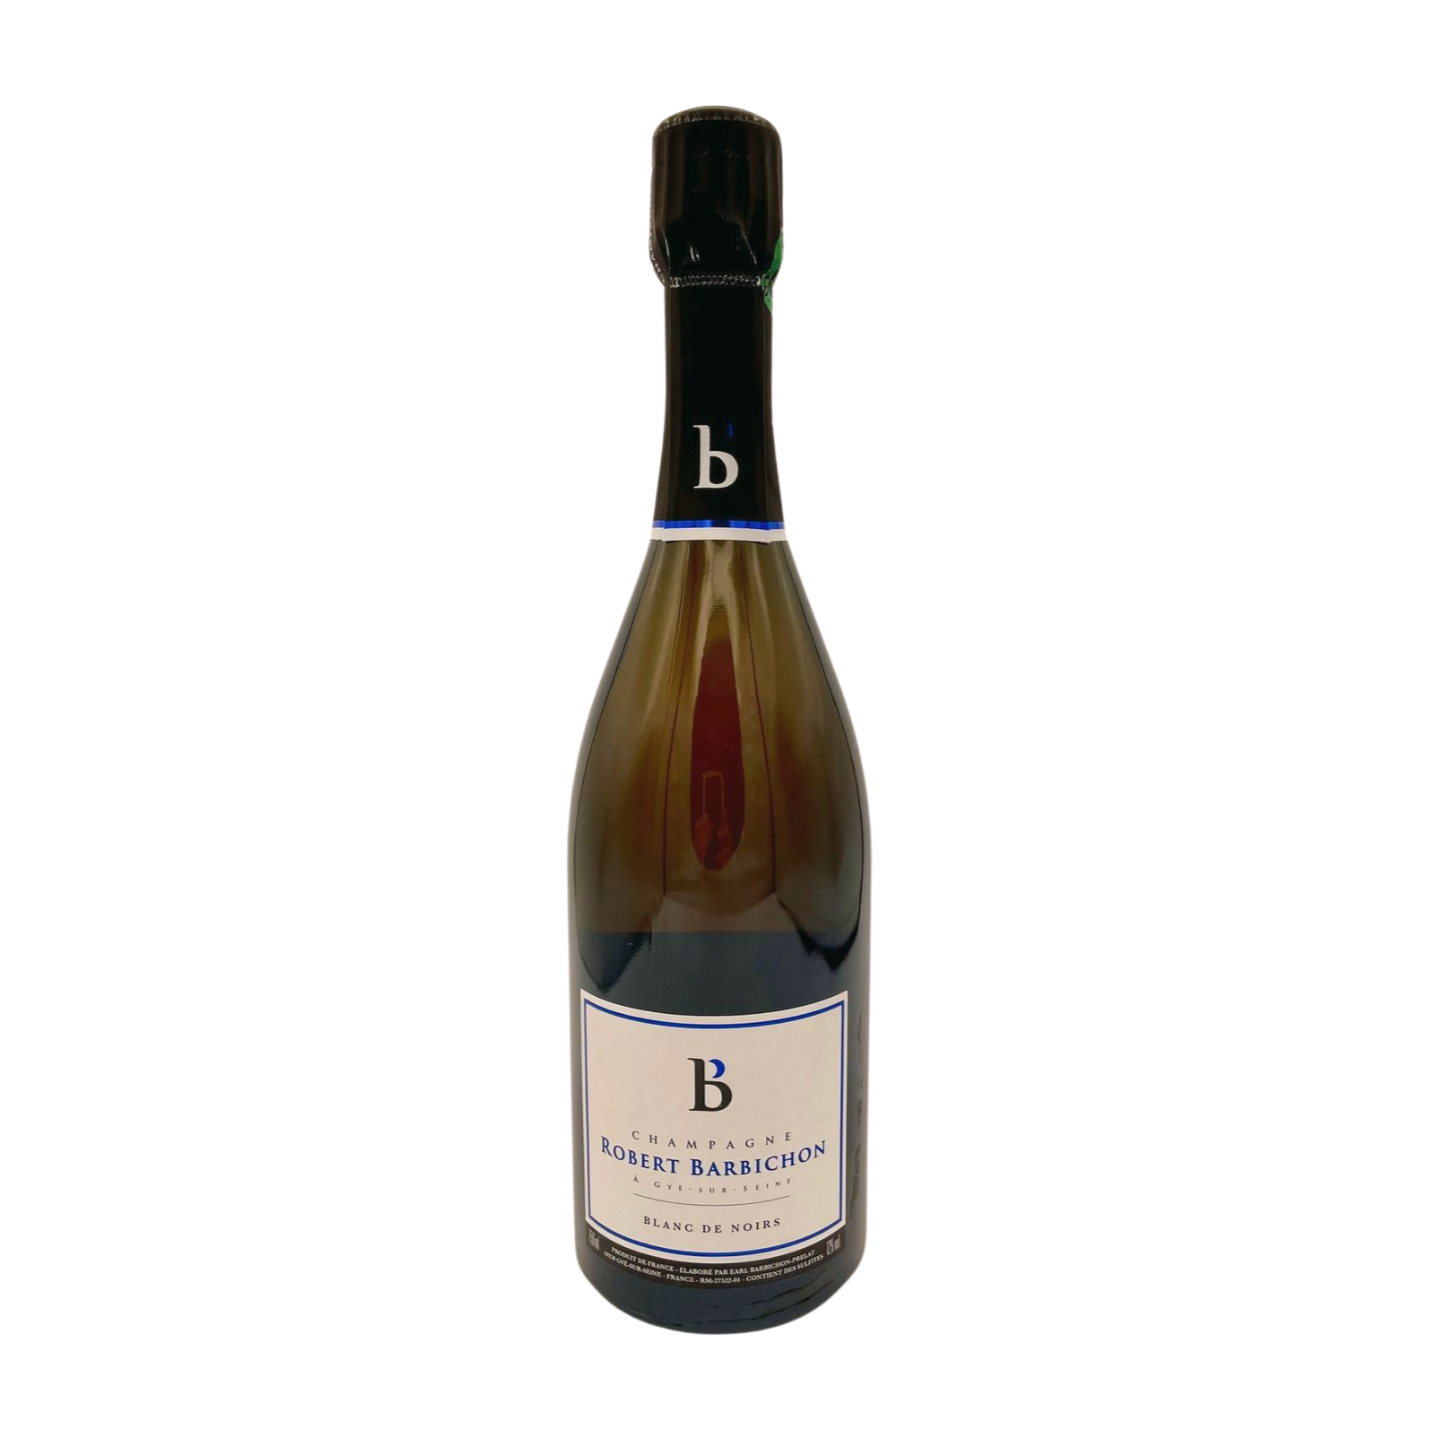 Robert Barbichon Blanc de Noirs Extra Brut Champagne